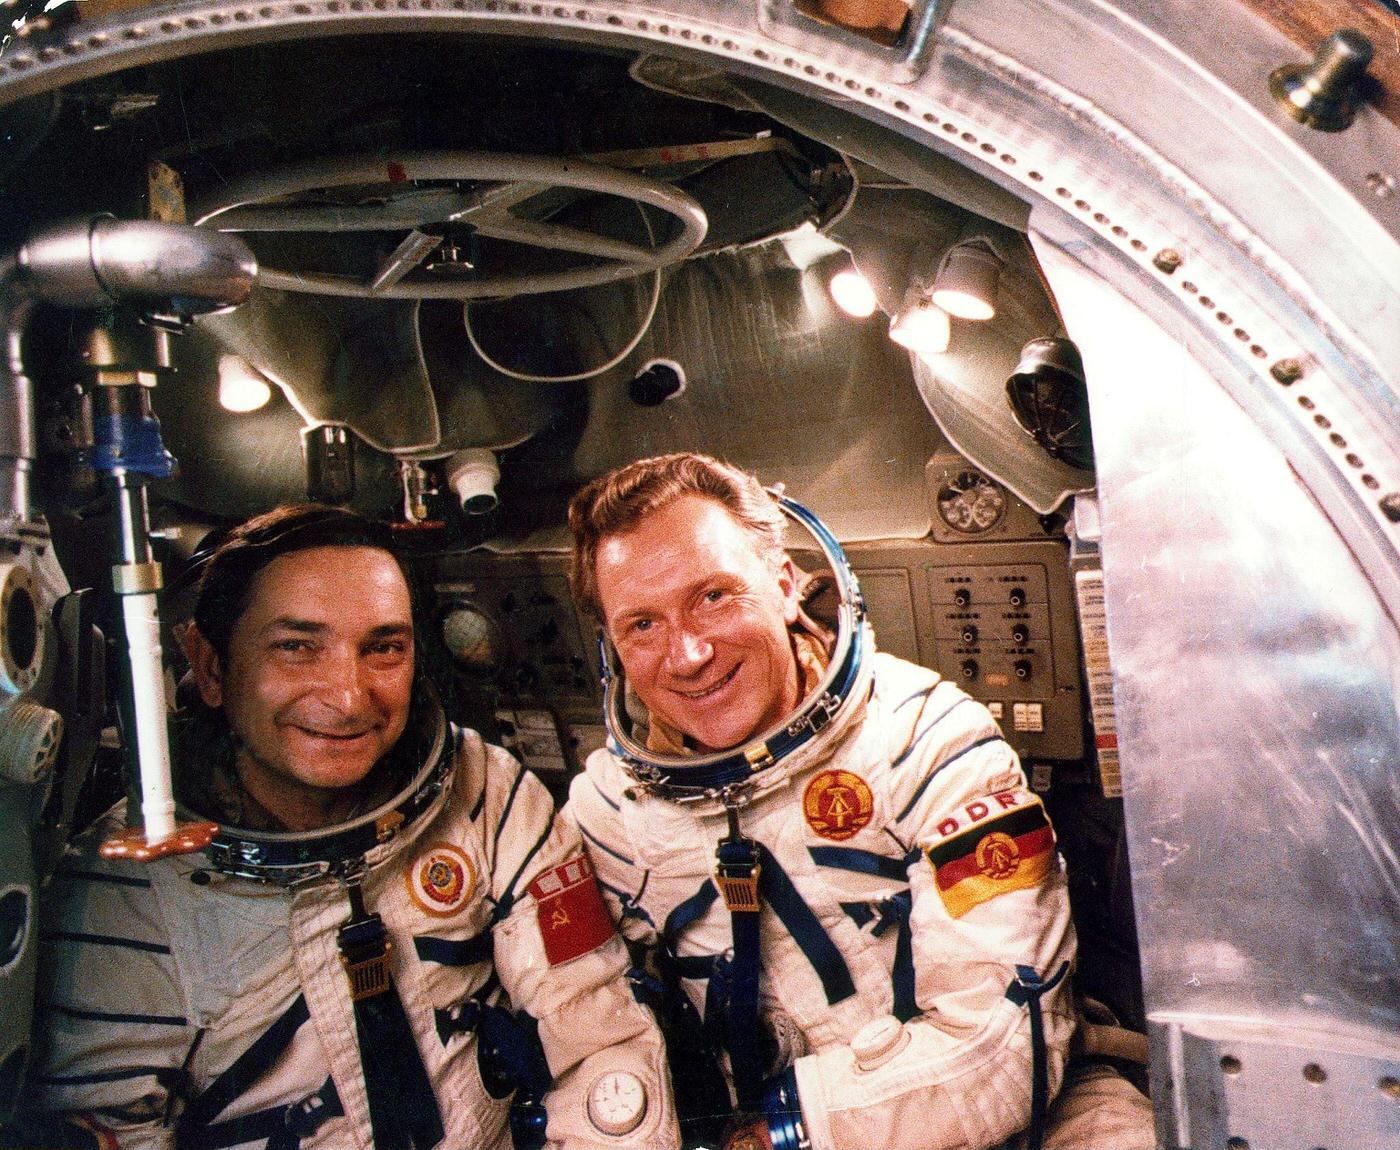 Soviet Union Spaceflight Siegmund Jaehn and his Soviet colleague Valery Bykovsky at the Yuri Gagarin Space Center, 1978